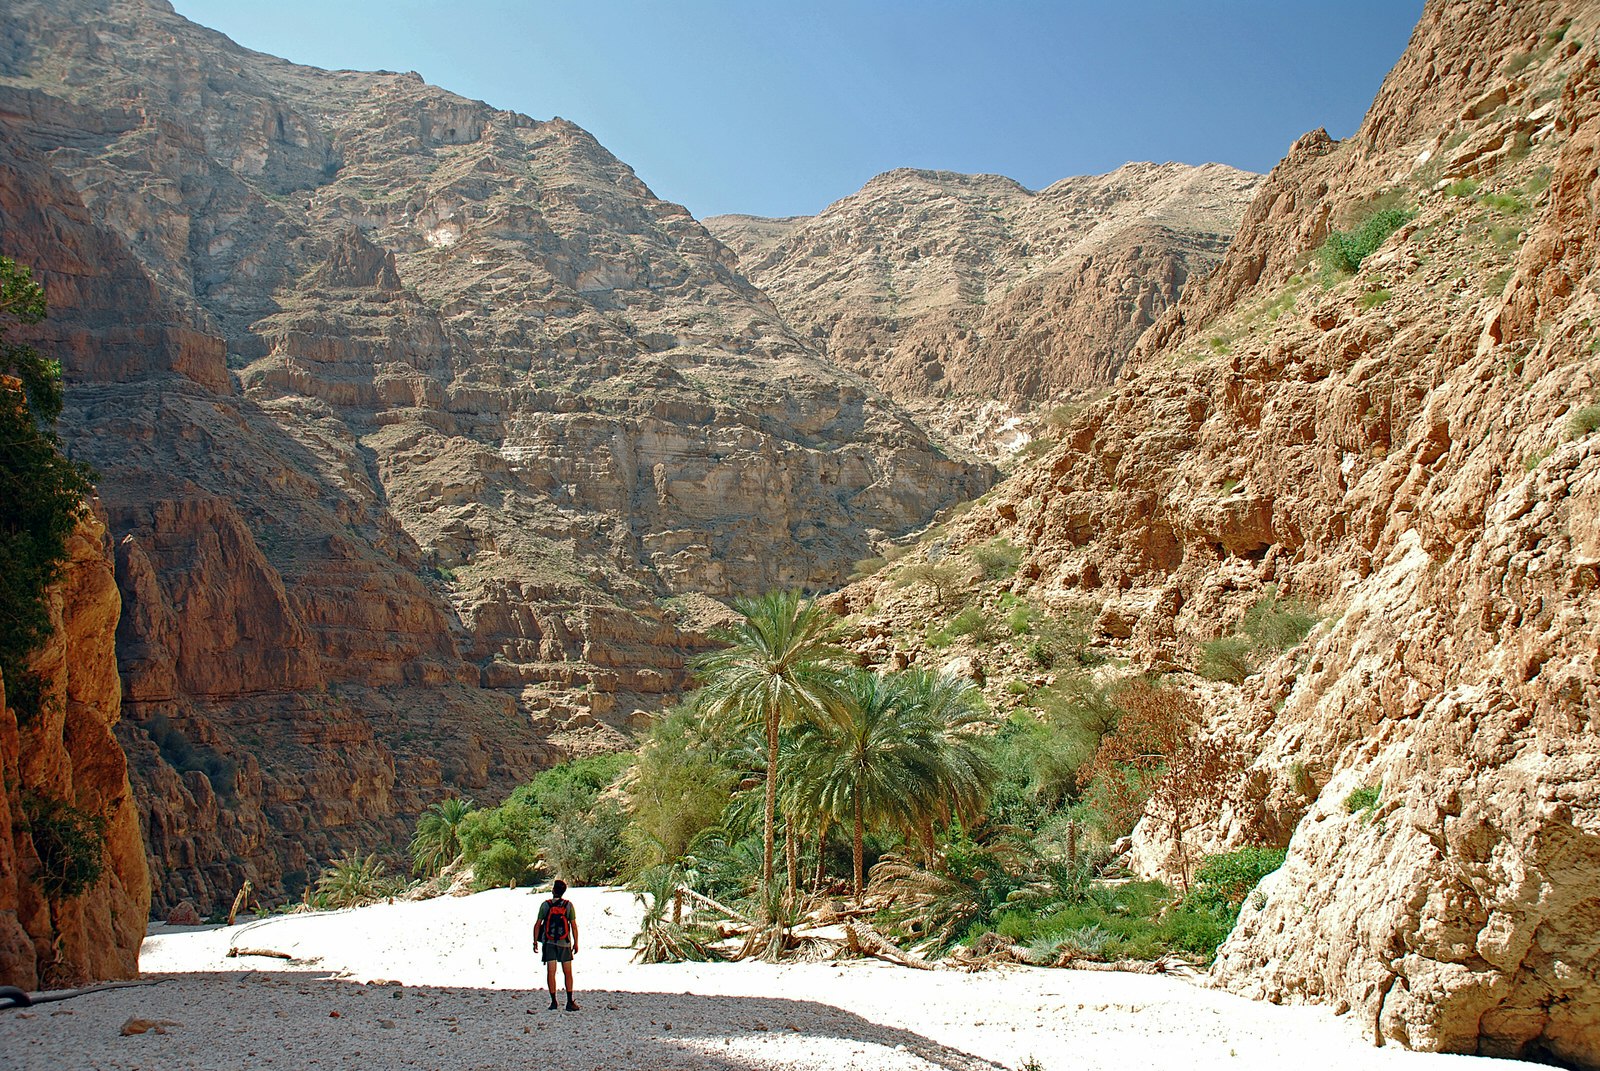 Hiking into Wadi Shab. Image by Marcin Szymczak / Shutterstock